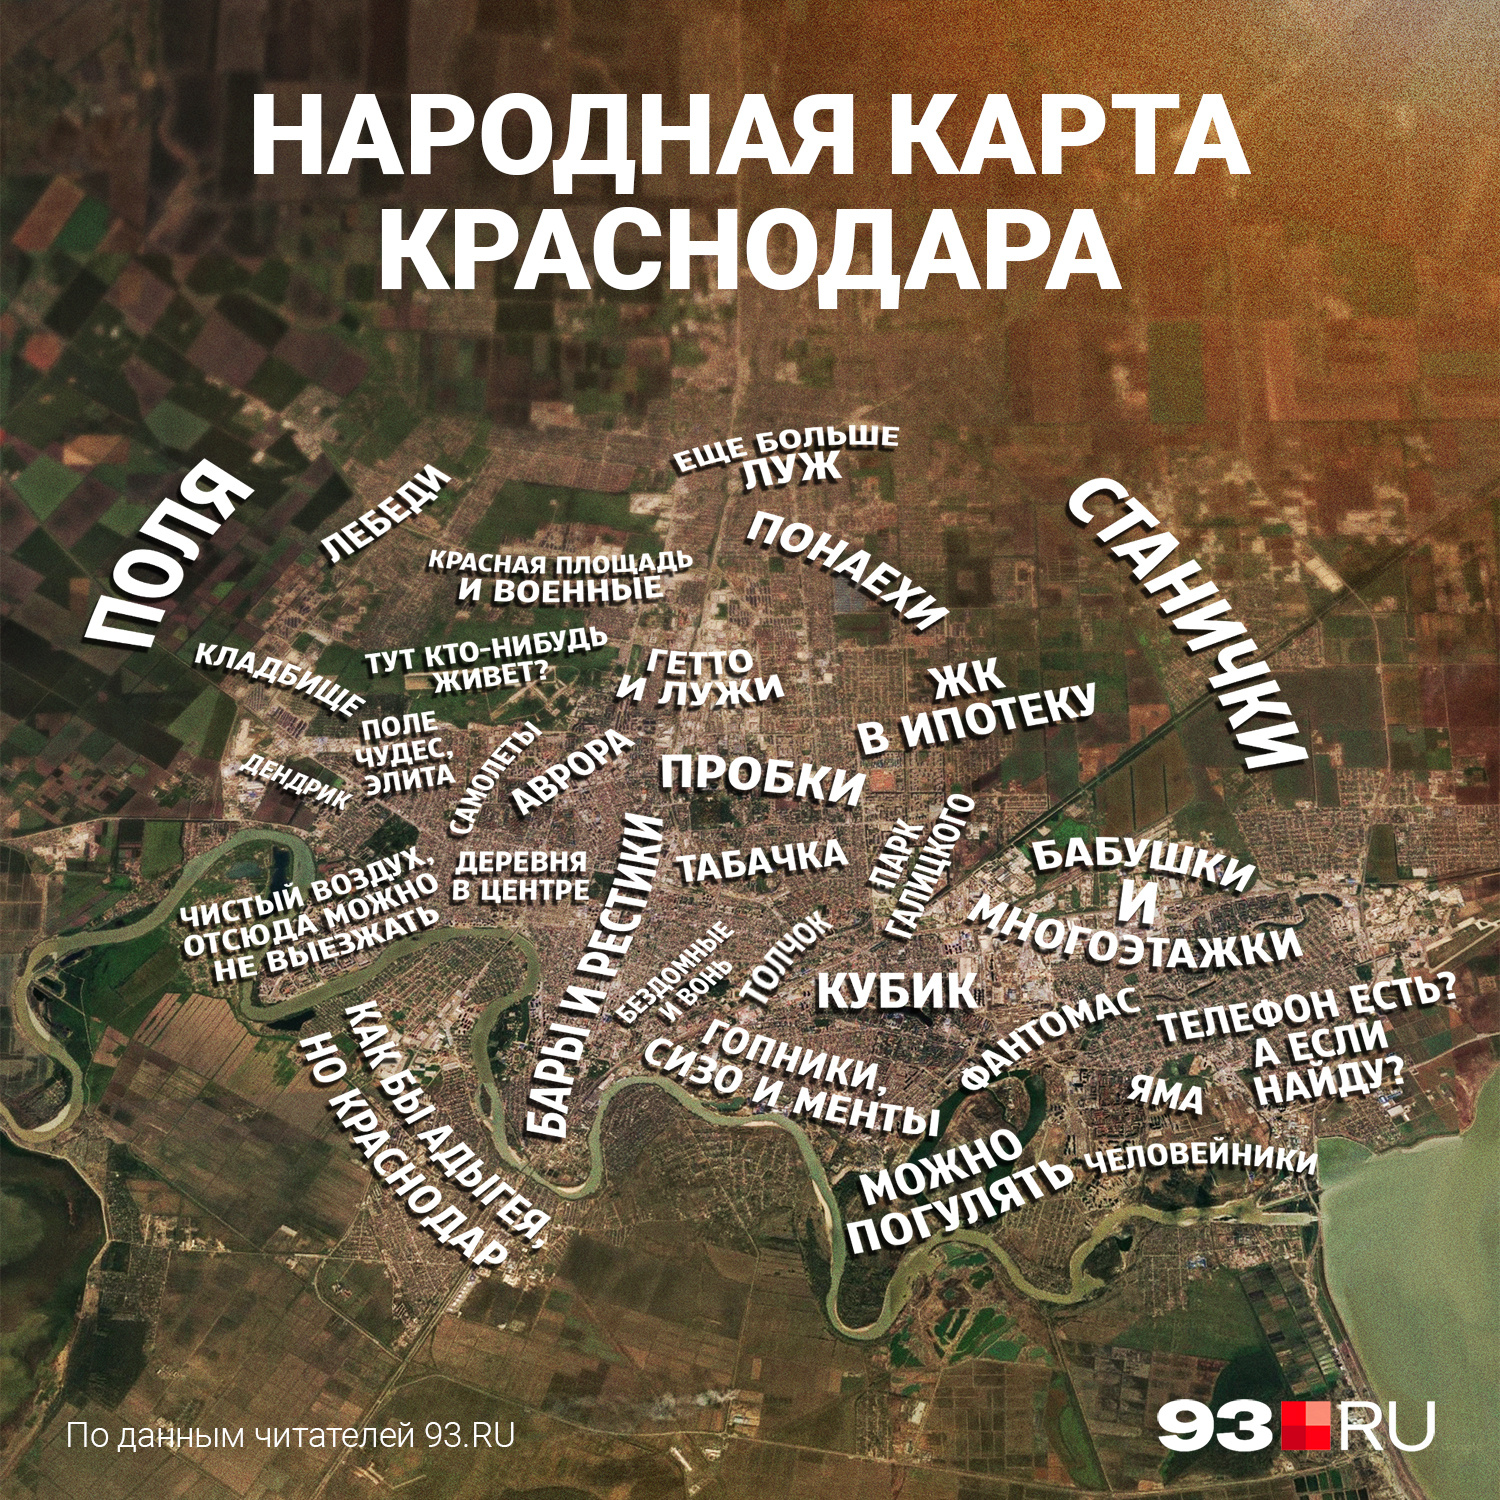 Карта краснодара народная